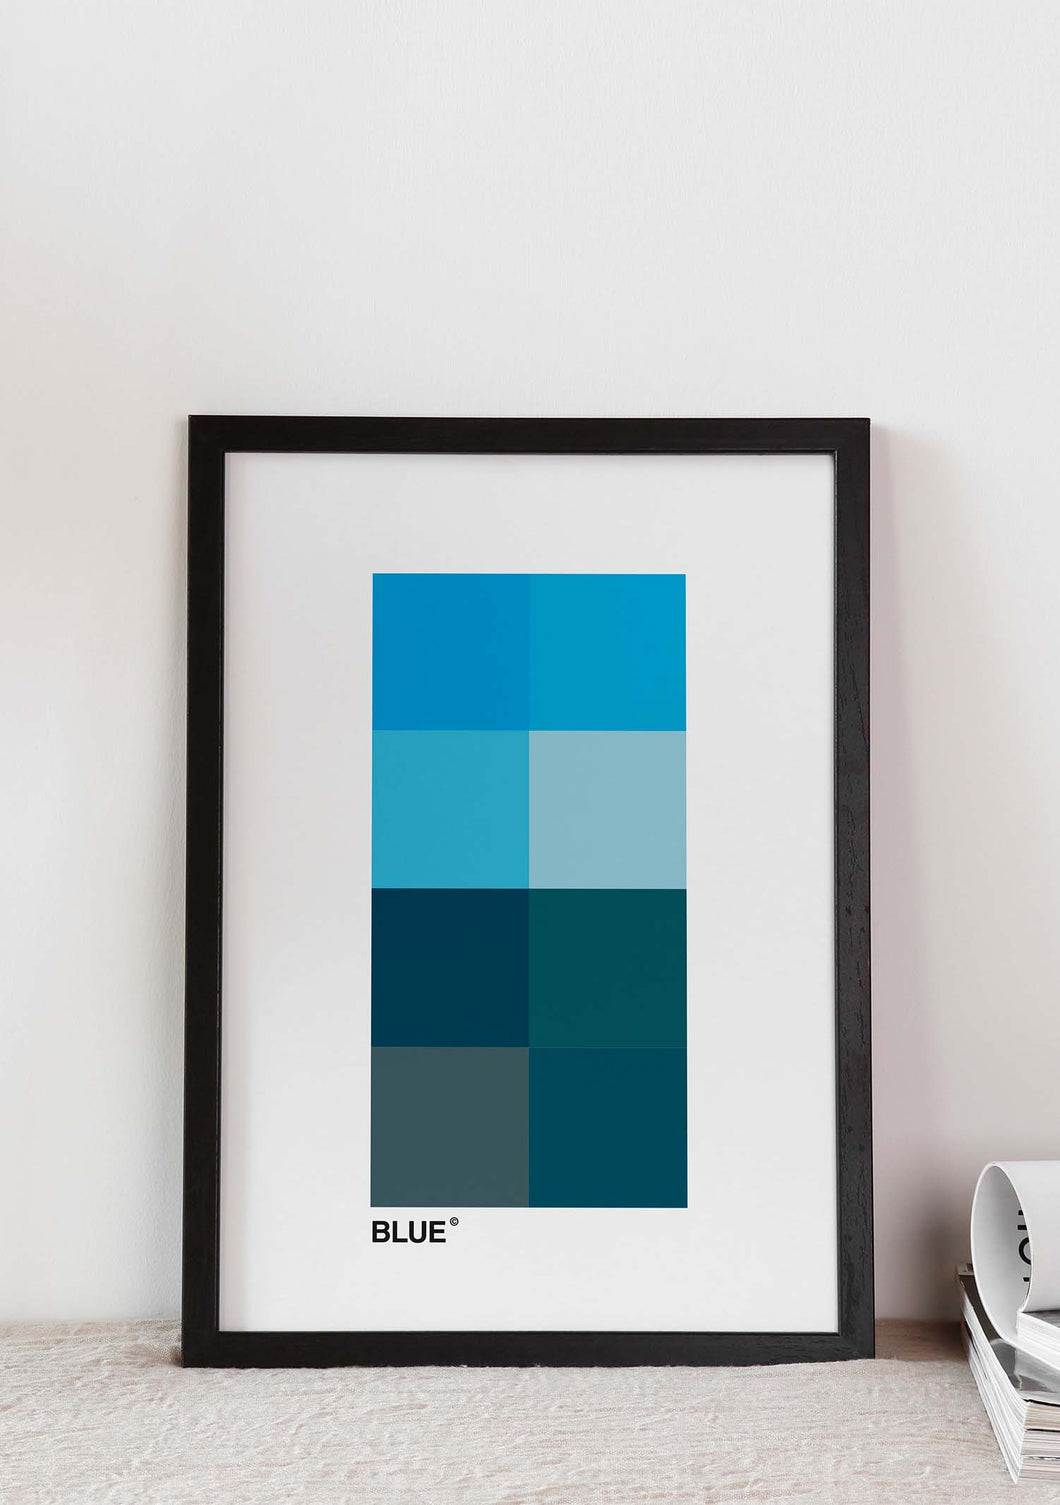 Pixel Blue